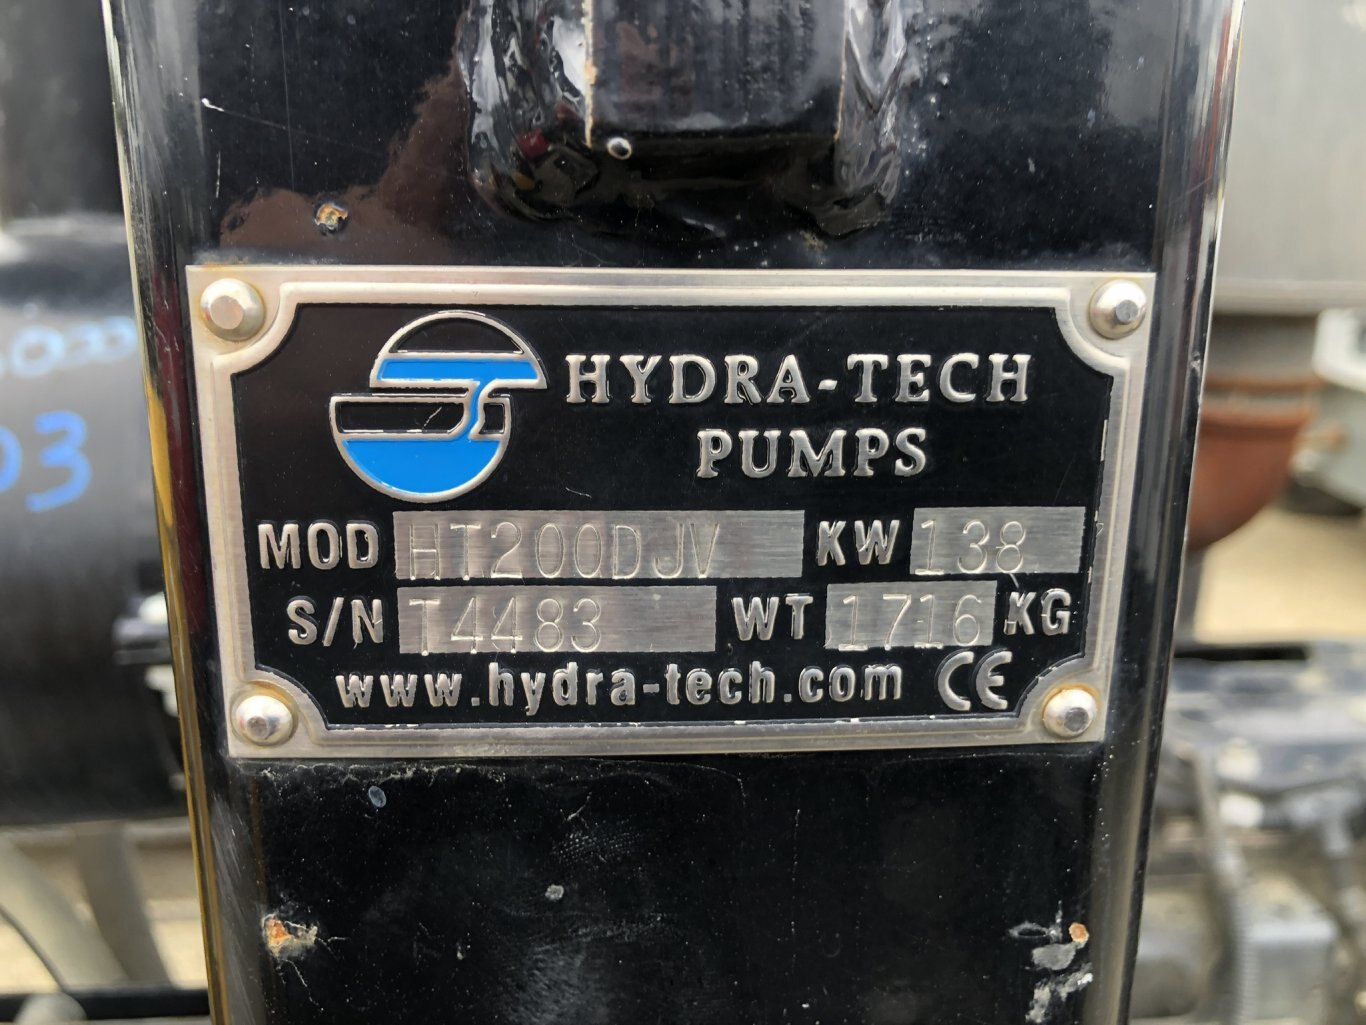 Hydra Tech HT200DJV Skid Mtd Hydraulic Power Unit Big Pump